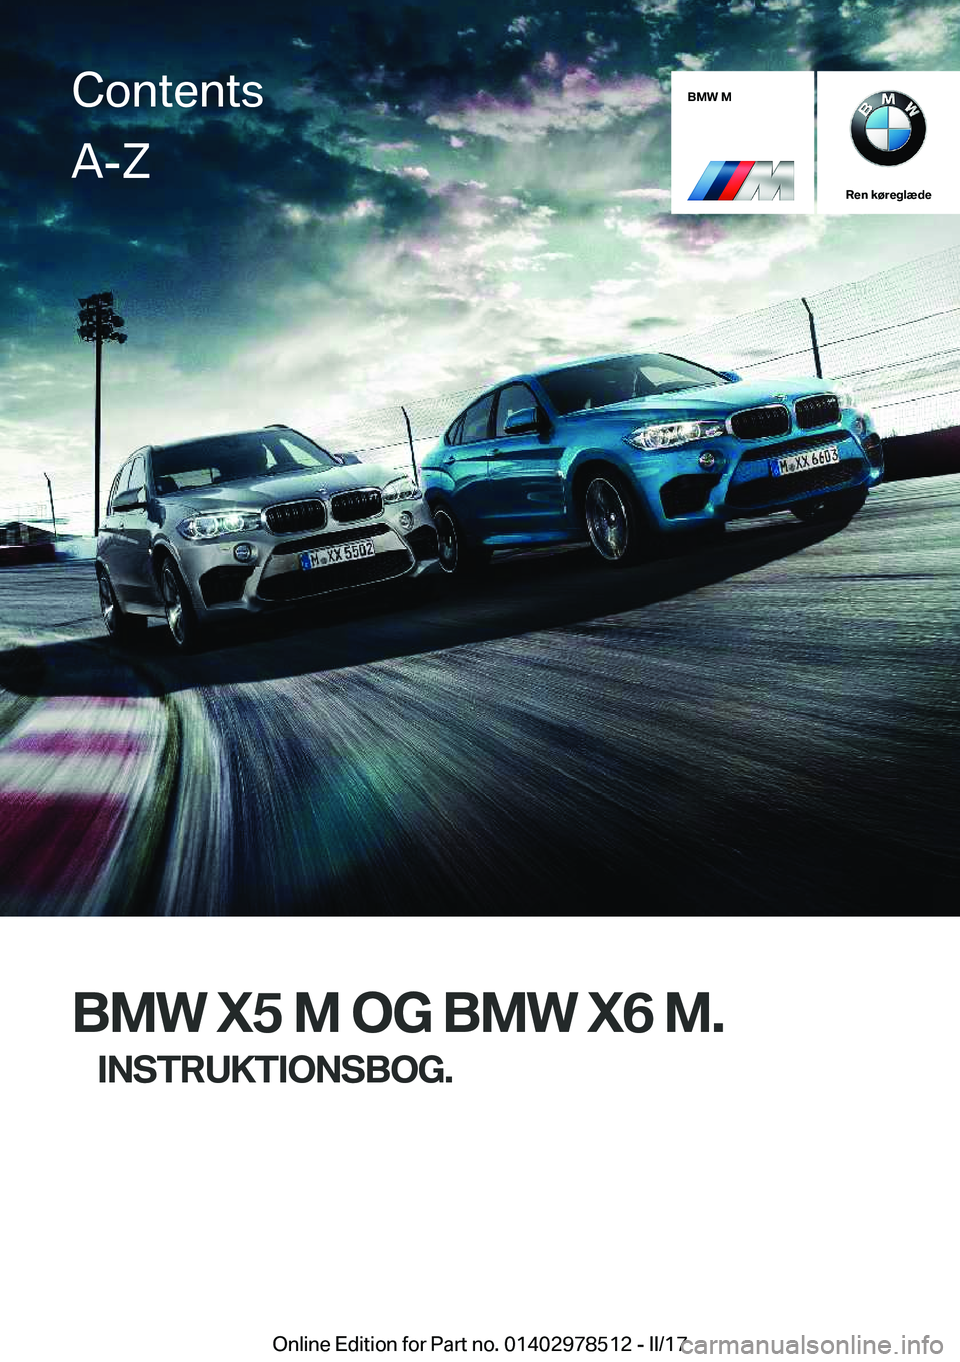 BMW X6 M 2017  InstruktionsbØger (in Danish) �B�M�W��M
�R�e�n��k�